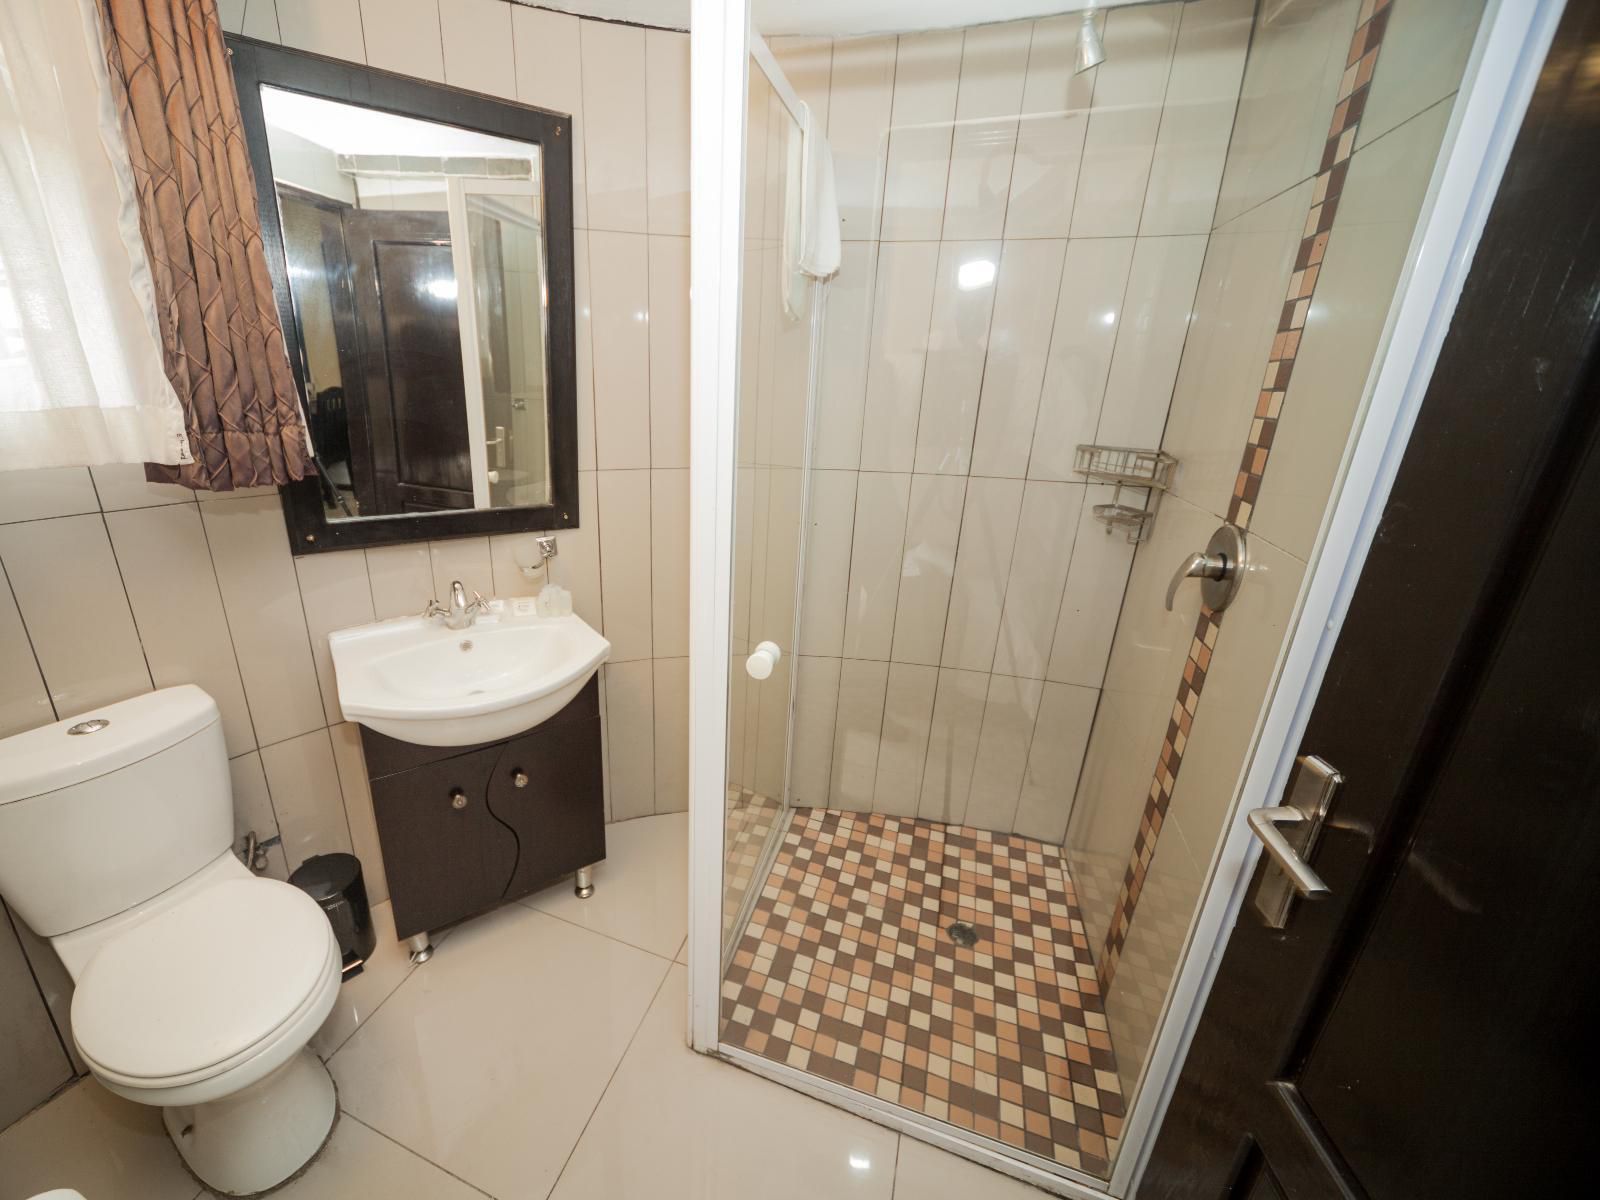 Dunwoodie Travel Lodge Waverley Pretoria Pretoria Tshwane Gauteng South Africa Sepia Tones, Bathroom